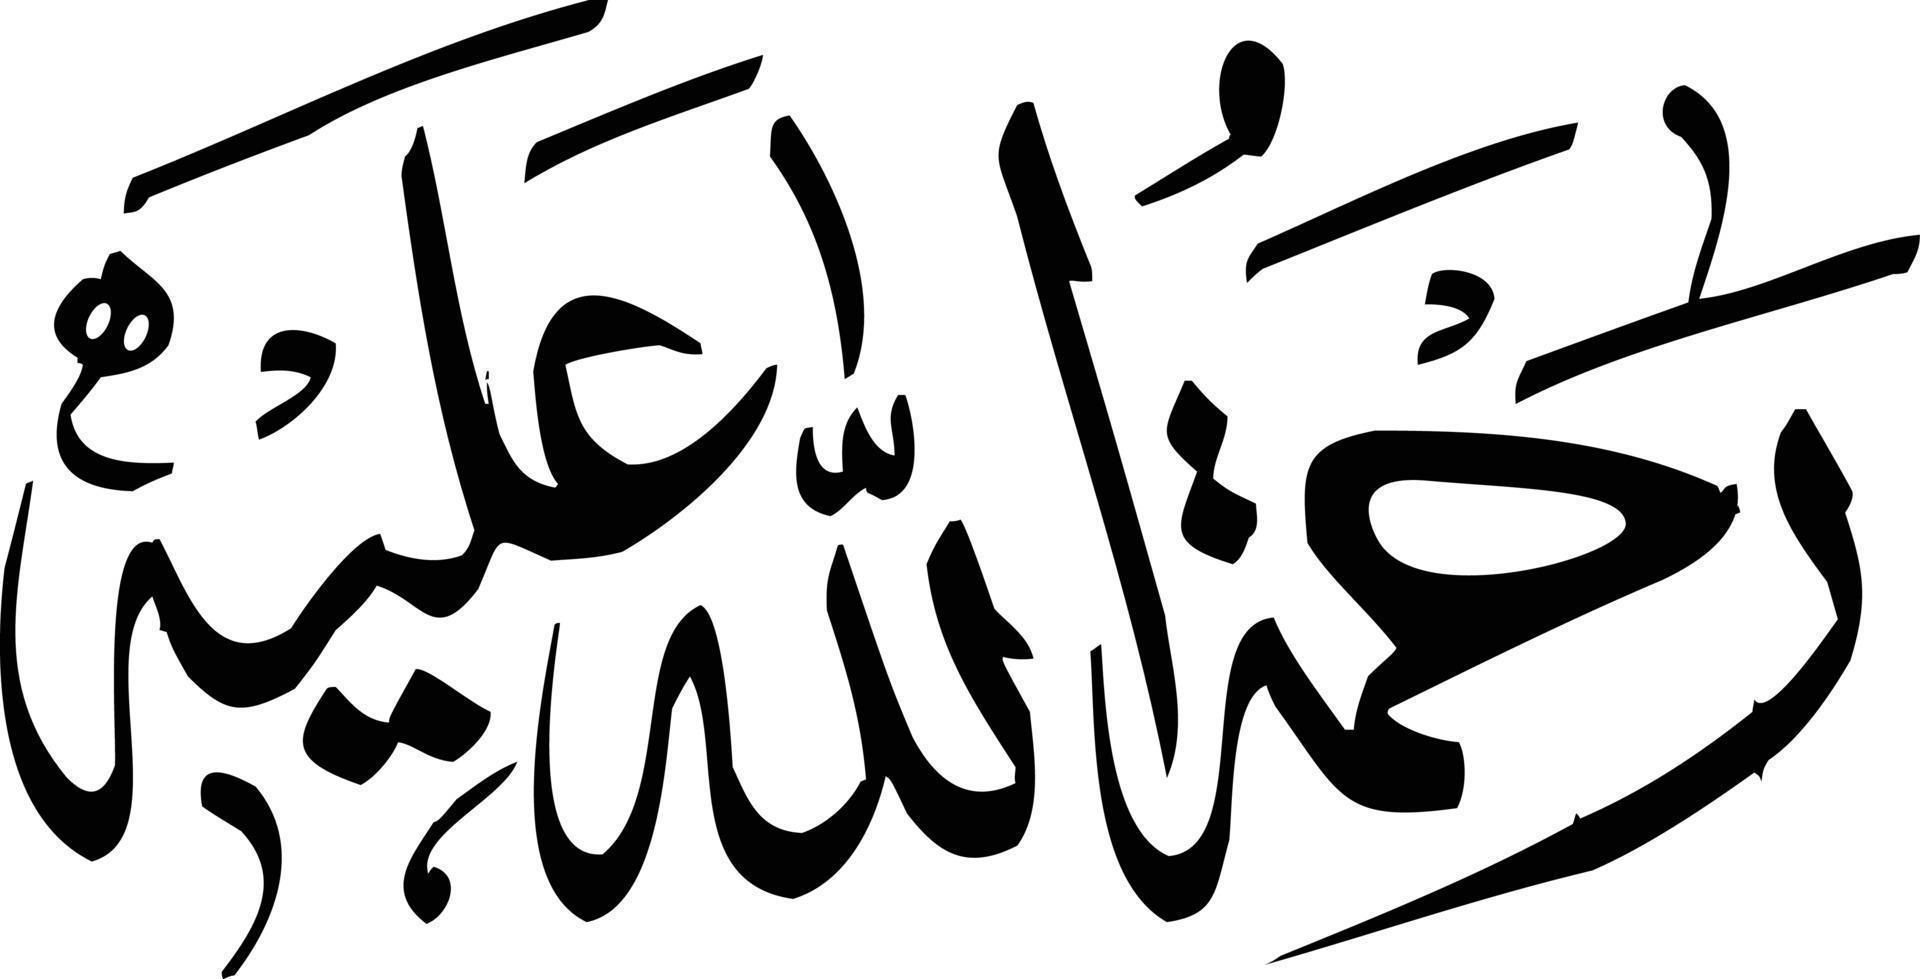 rhamatulaalhe título caligrafia islâmica vetor livre